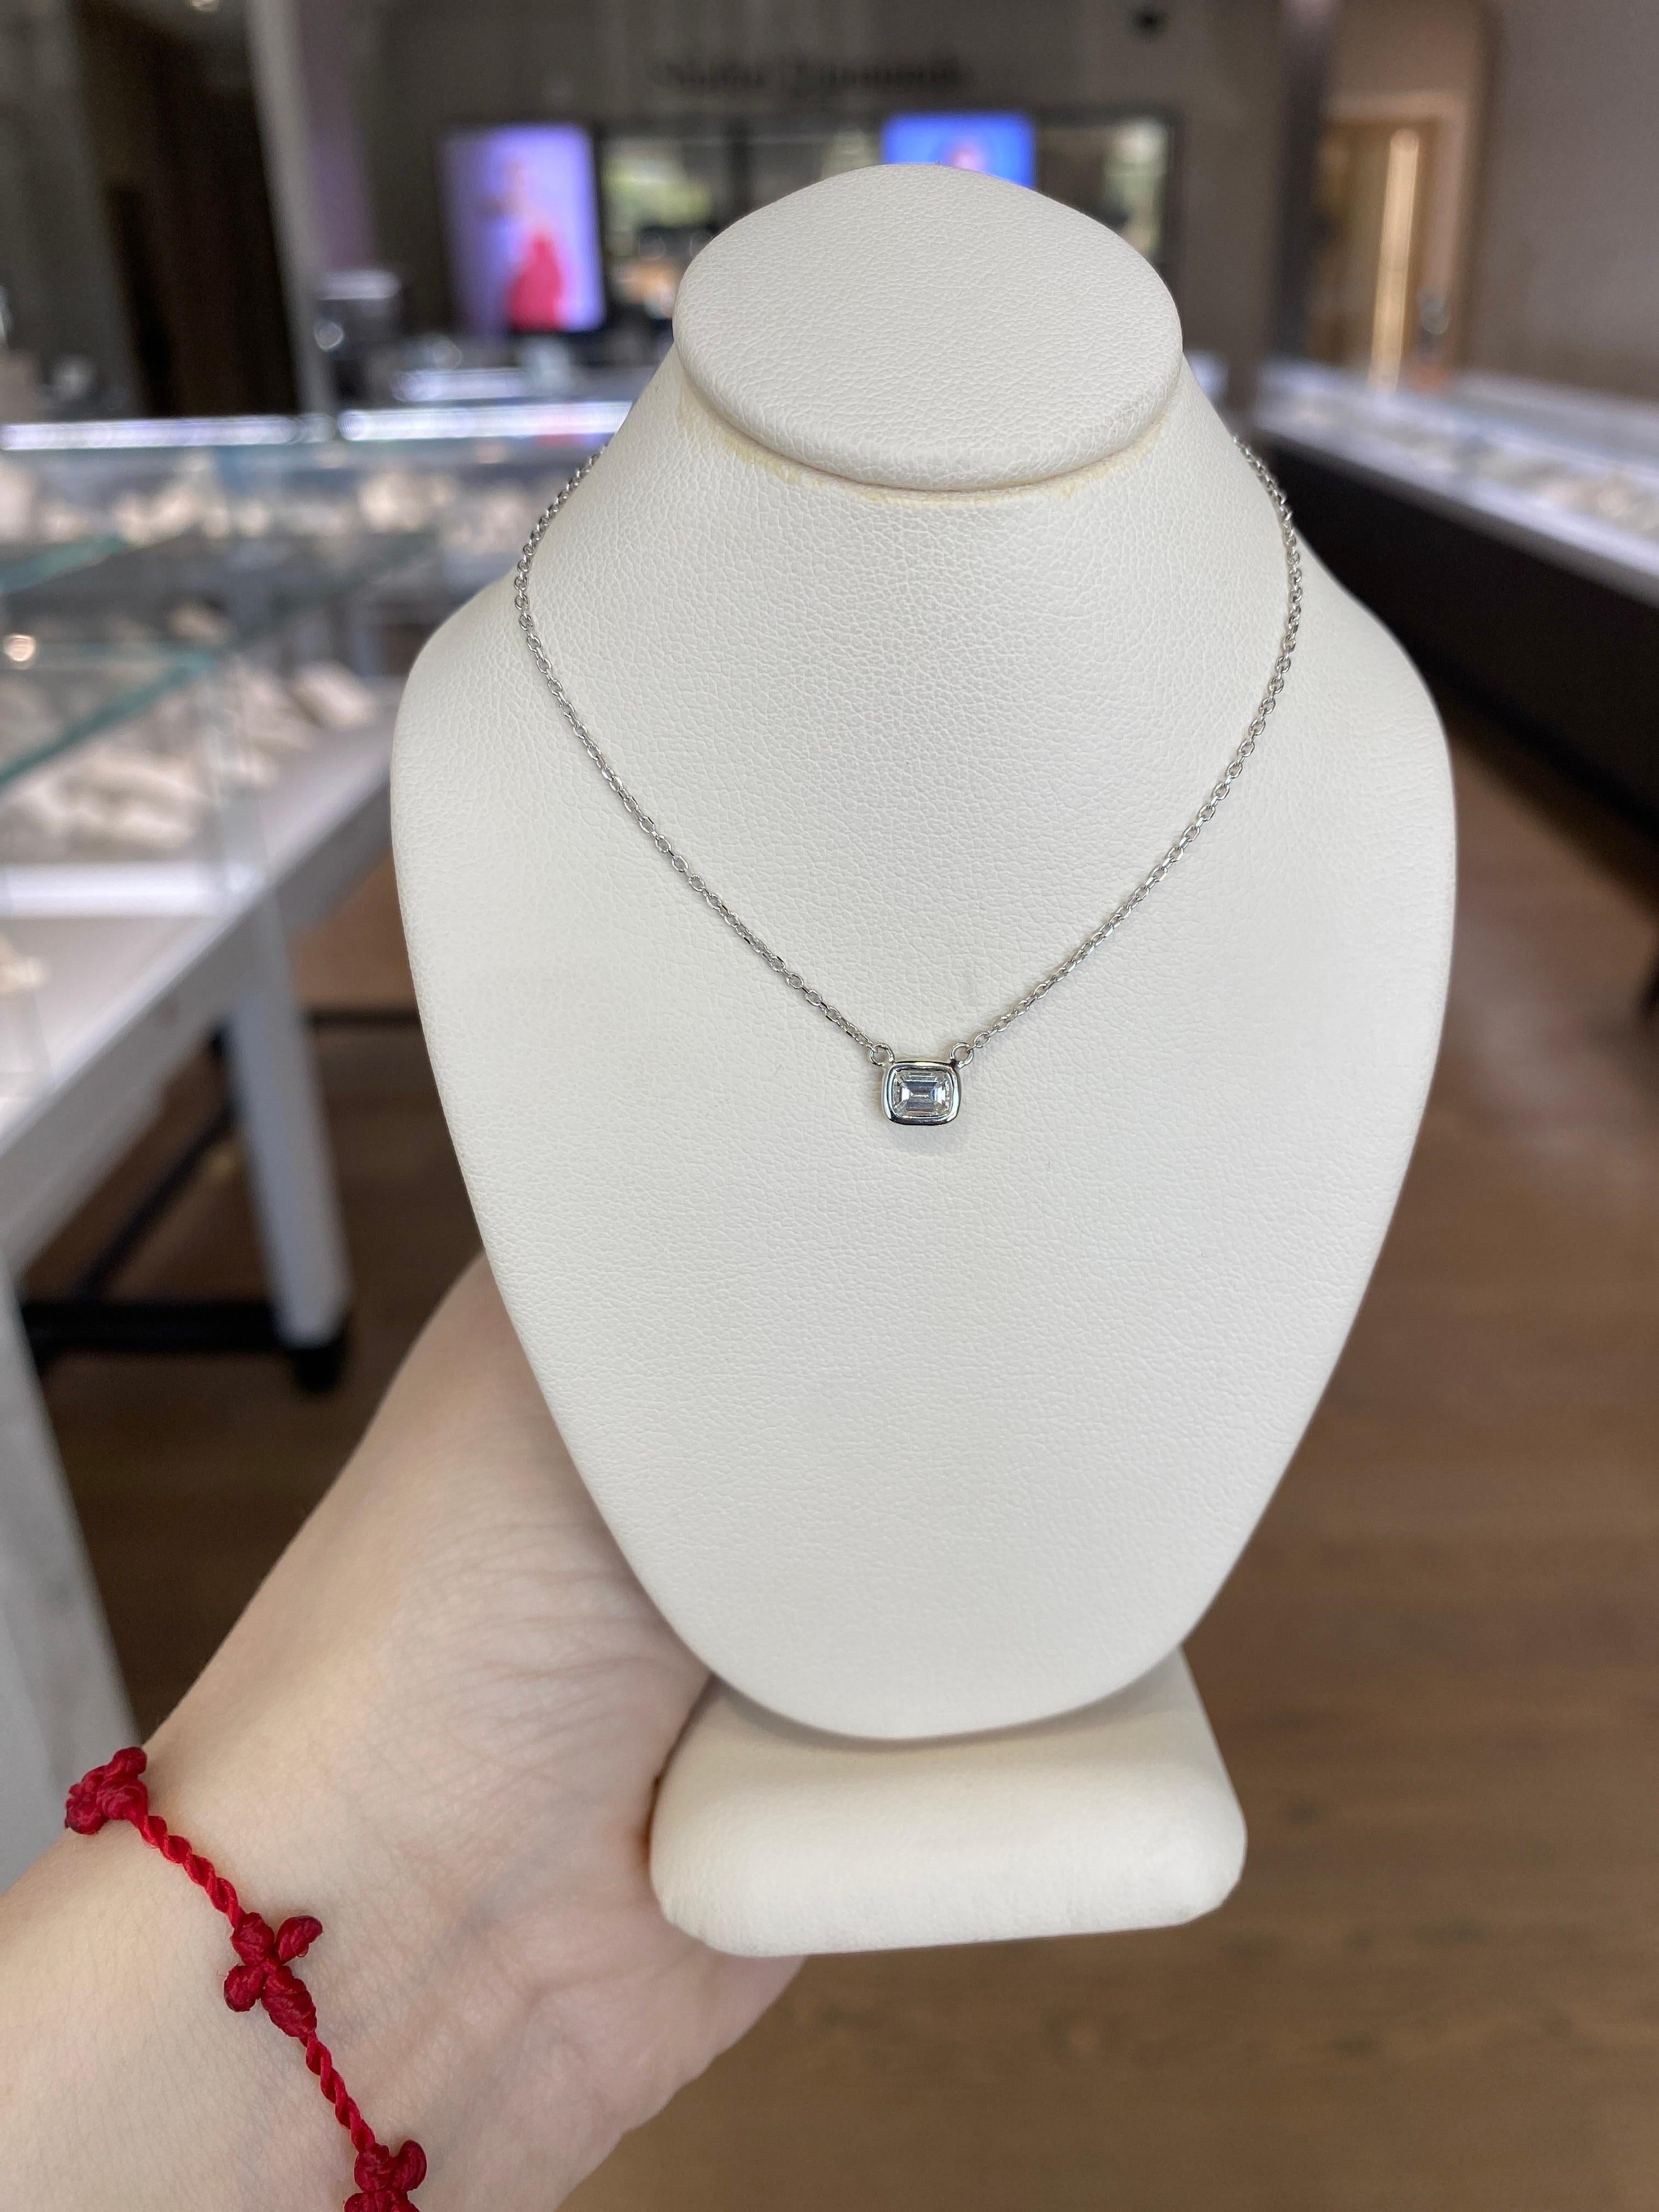 14k White Gold 0.23 Carat Natural Emerald Cut Diamond Pendant Necklace  For Sale 11